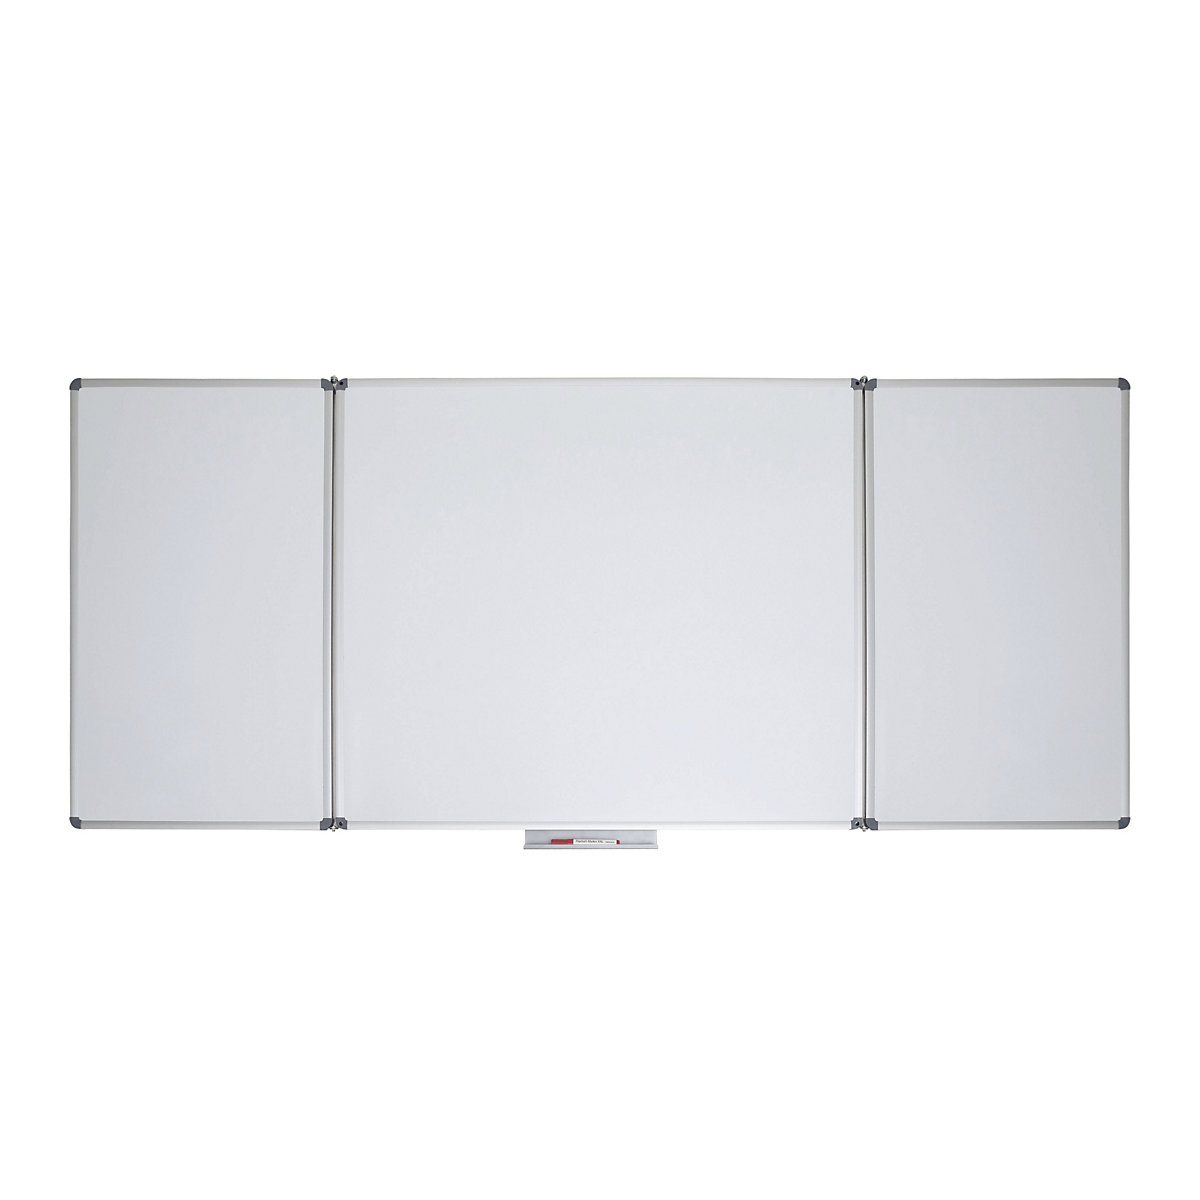 Bela zložljiva tabla – MAUL, jeklena pločevina, z oblogo, ŠxV 1500 x 1000 mm-4